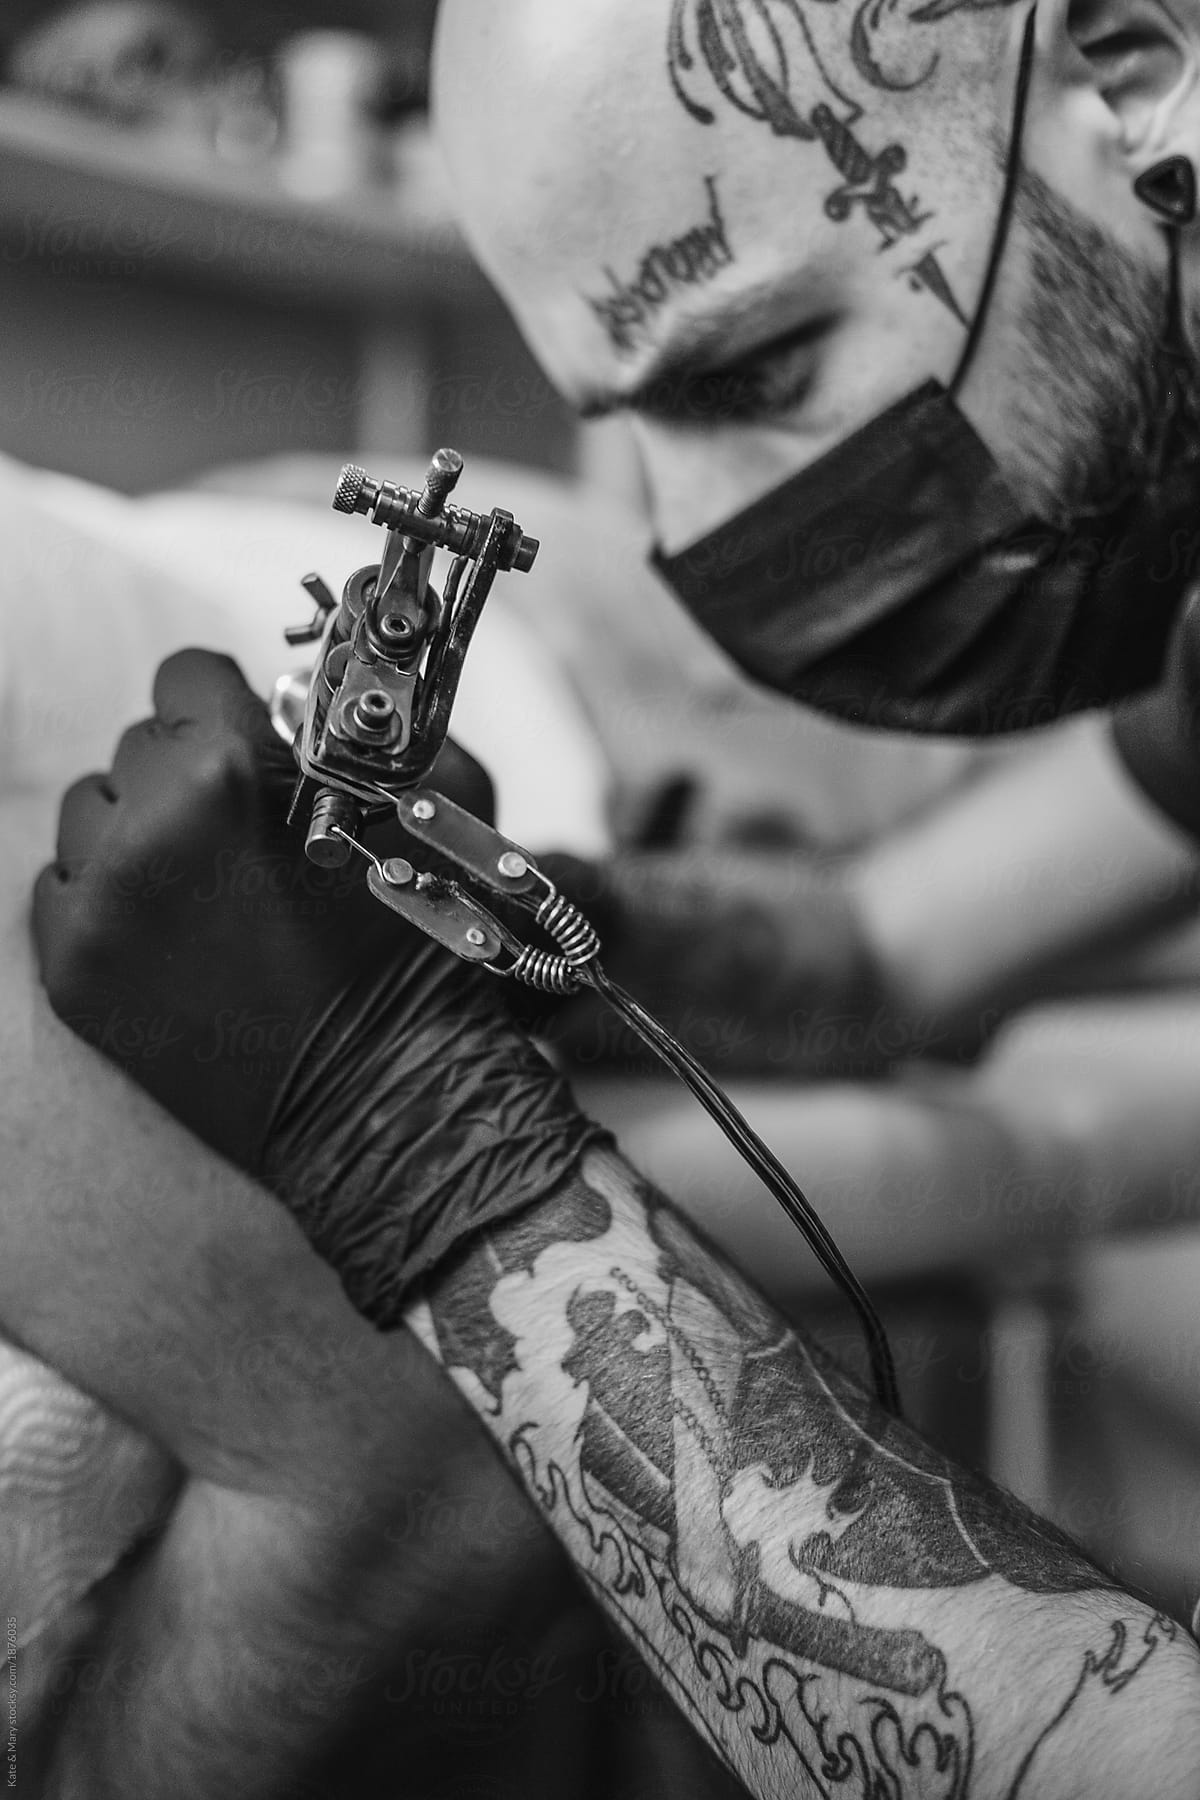 Tattoo artist drawing on client's skin